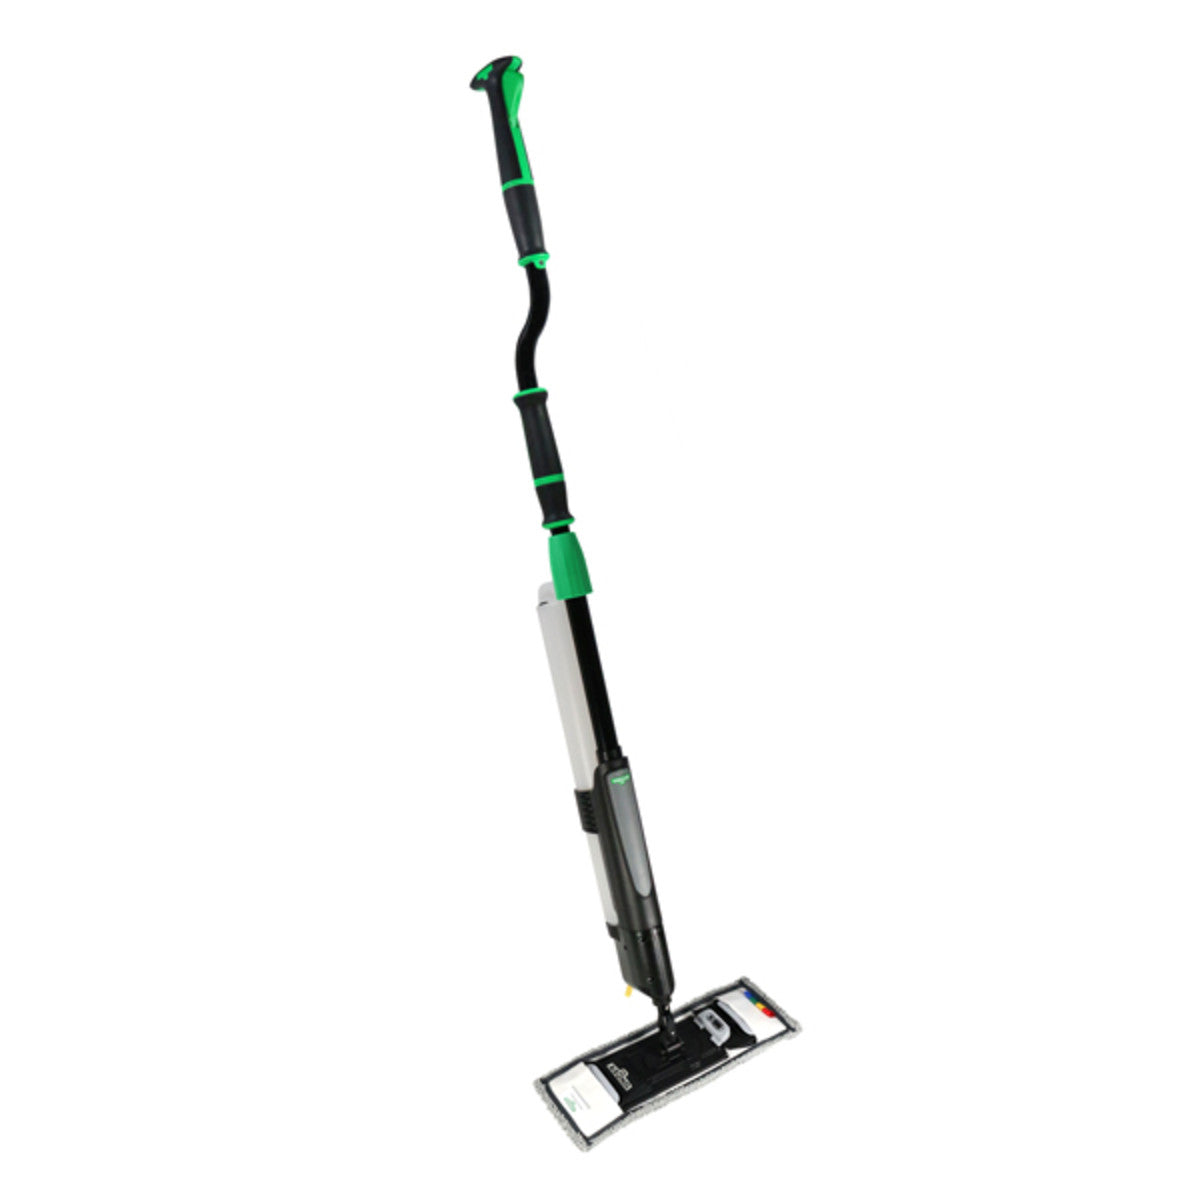 Unger Excella™ Floor Cleaning Pocket Mop Kit